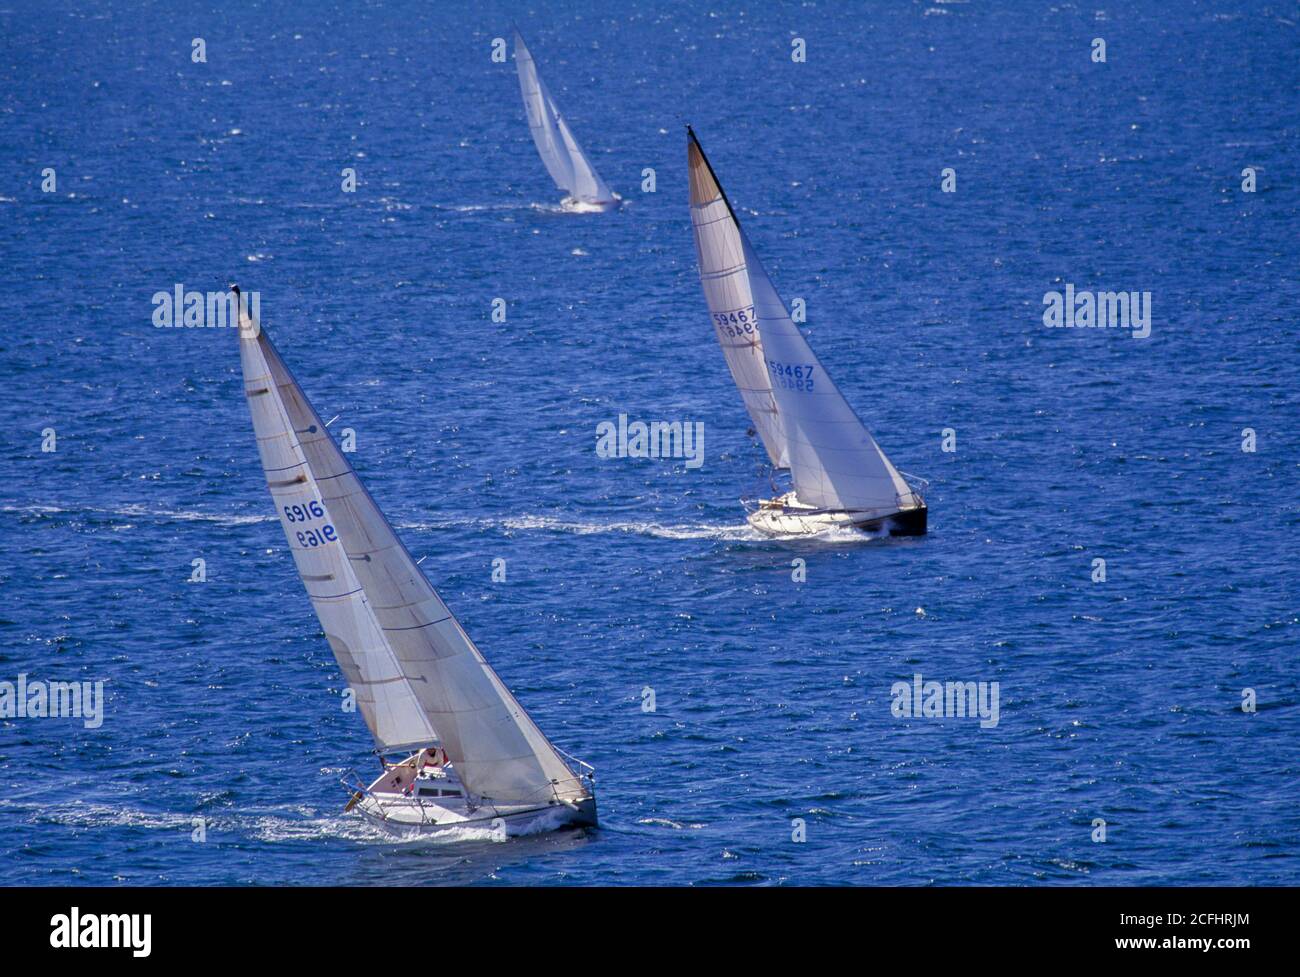 Sailboat racing on Puget Sound, Seattle, Washington USA Stock Photo